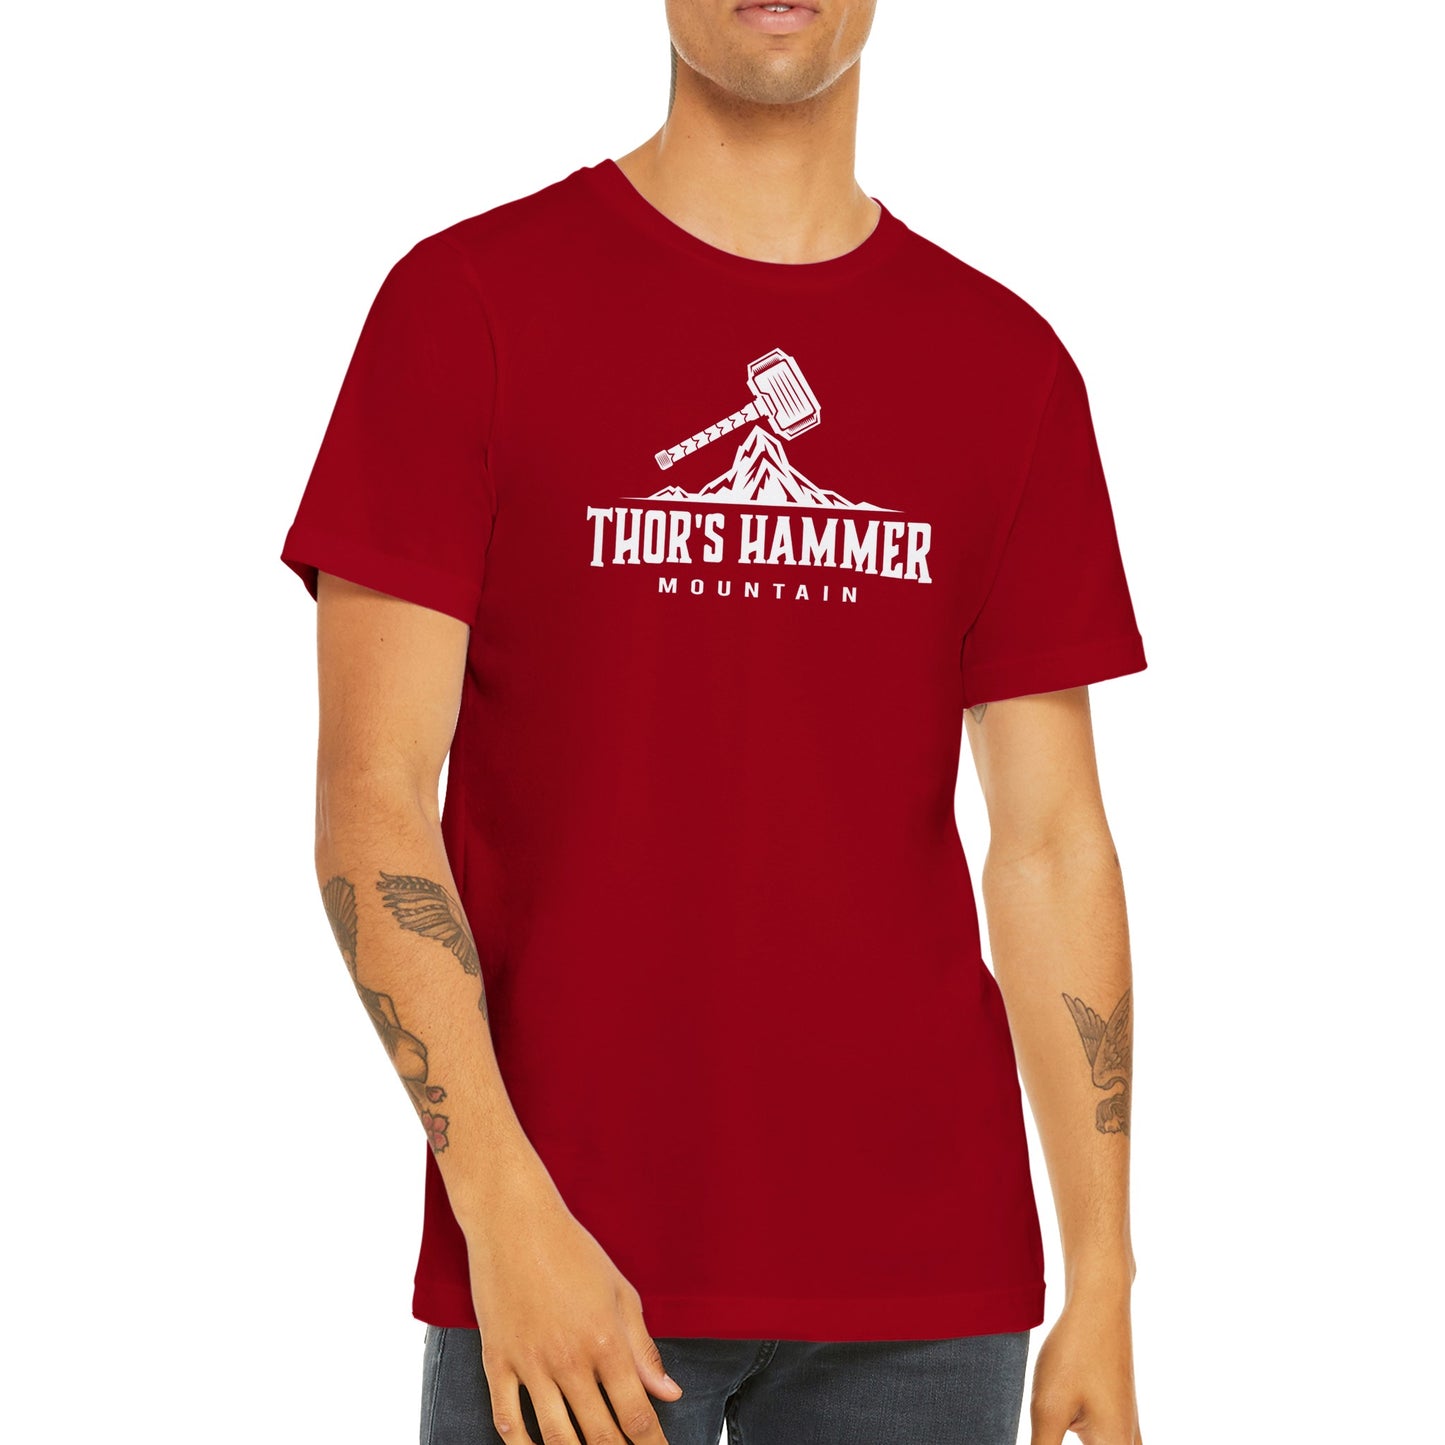 Thors hammer mountain T-shirt